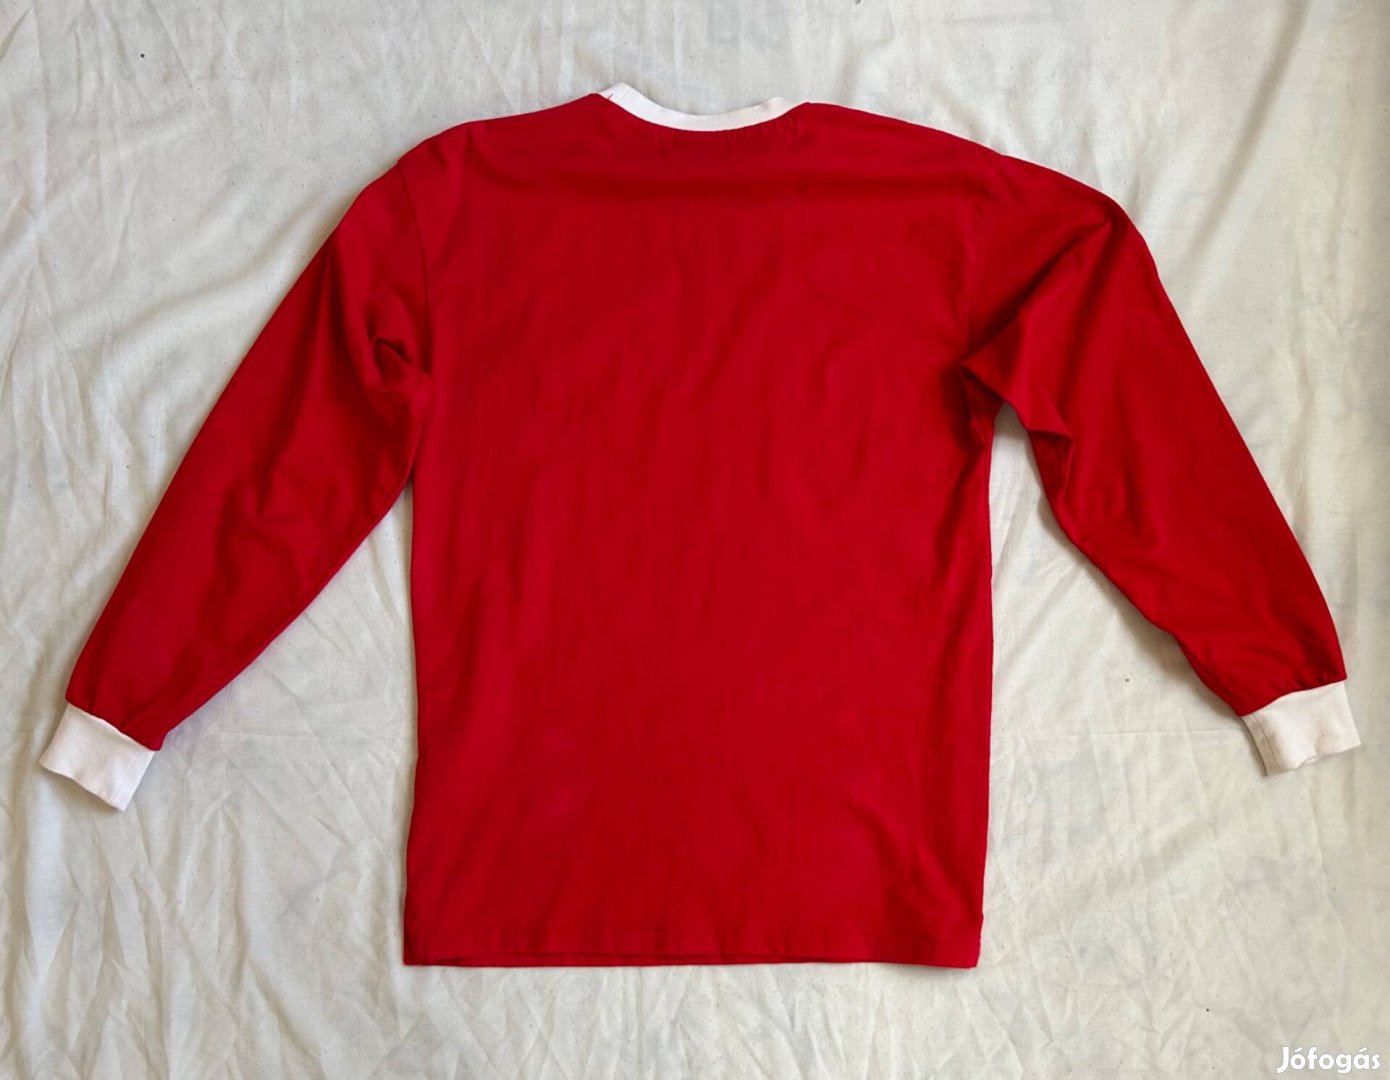 liverpool 1964 shirt